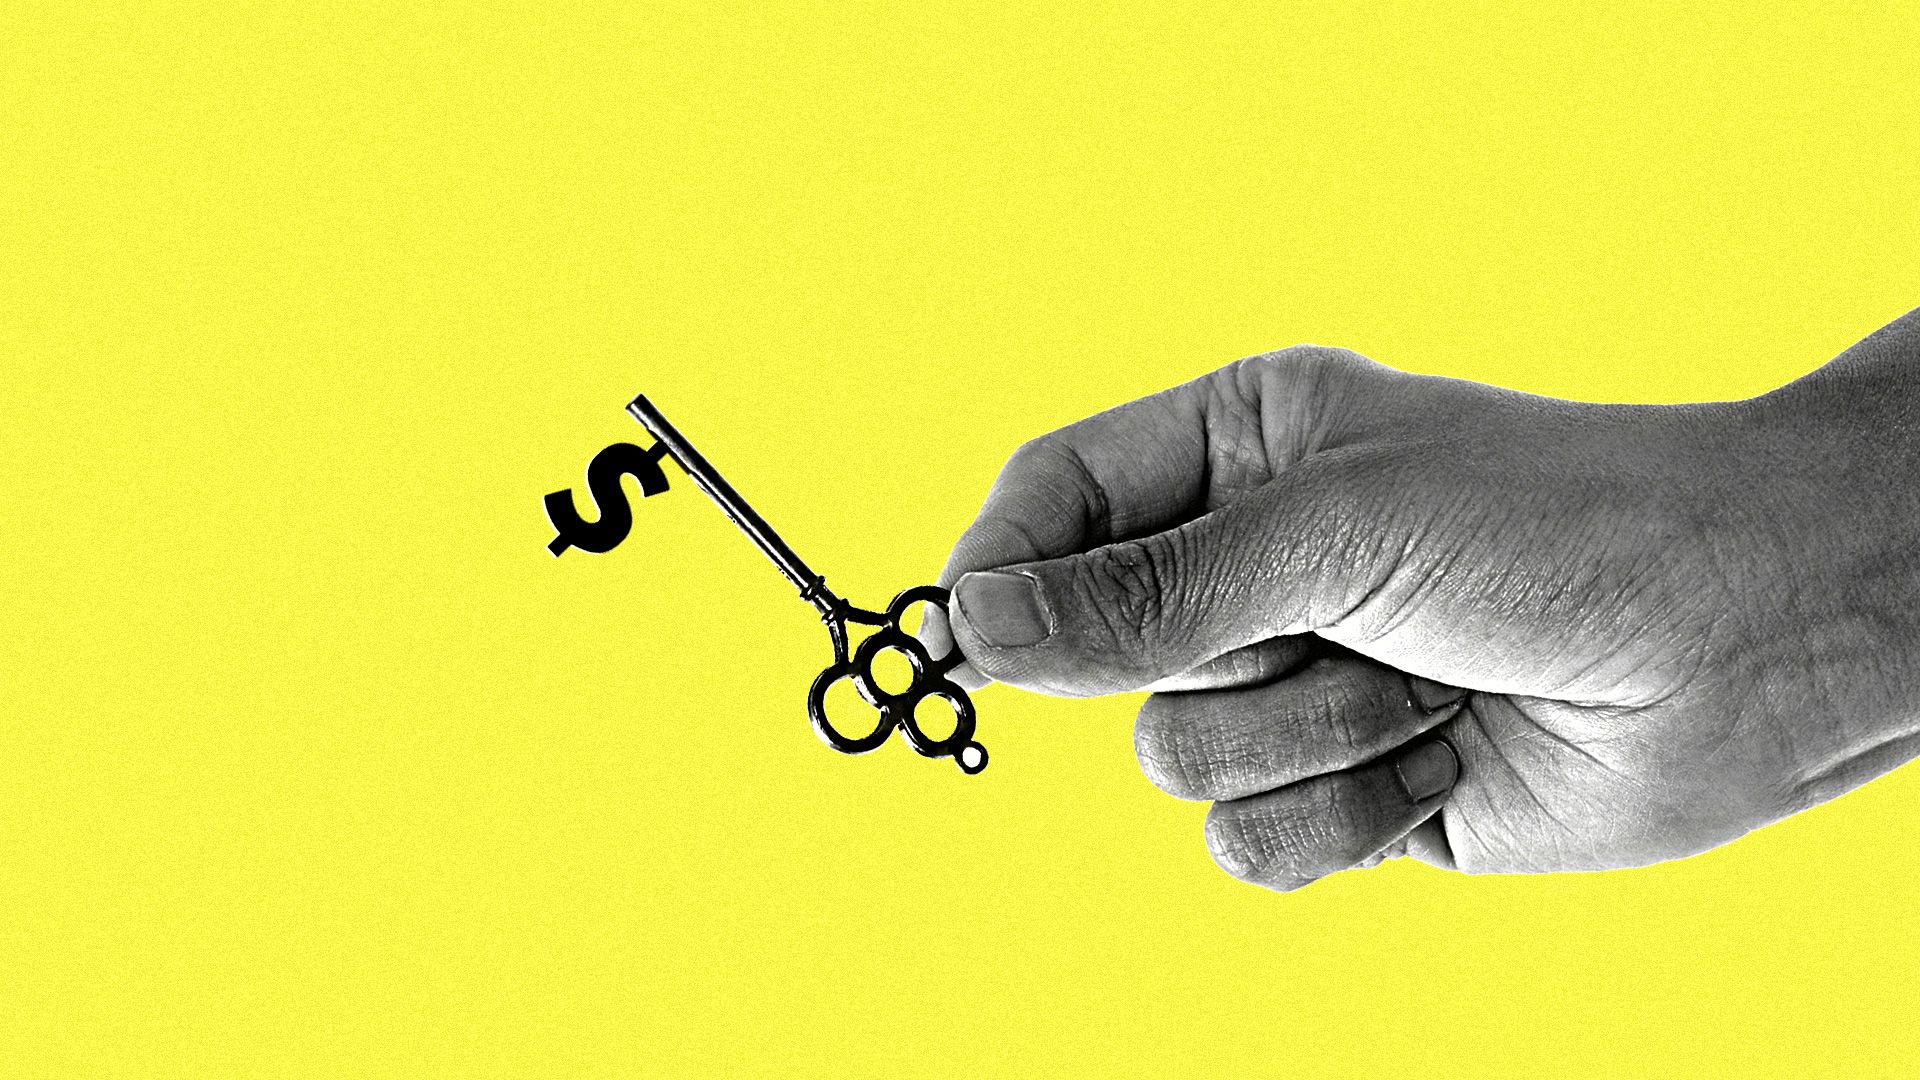 A hand holding a key shaped like a dollar sign